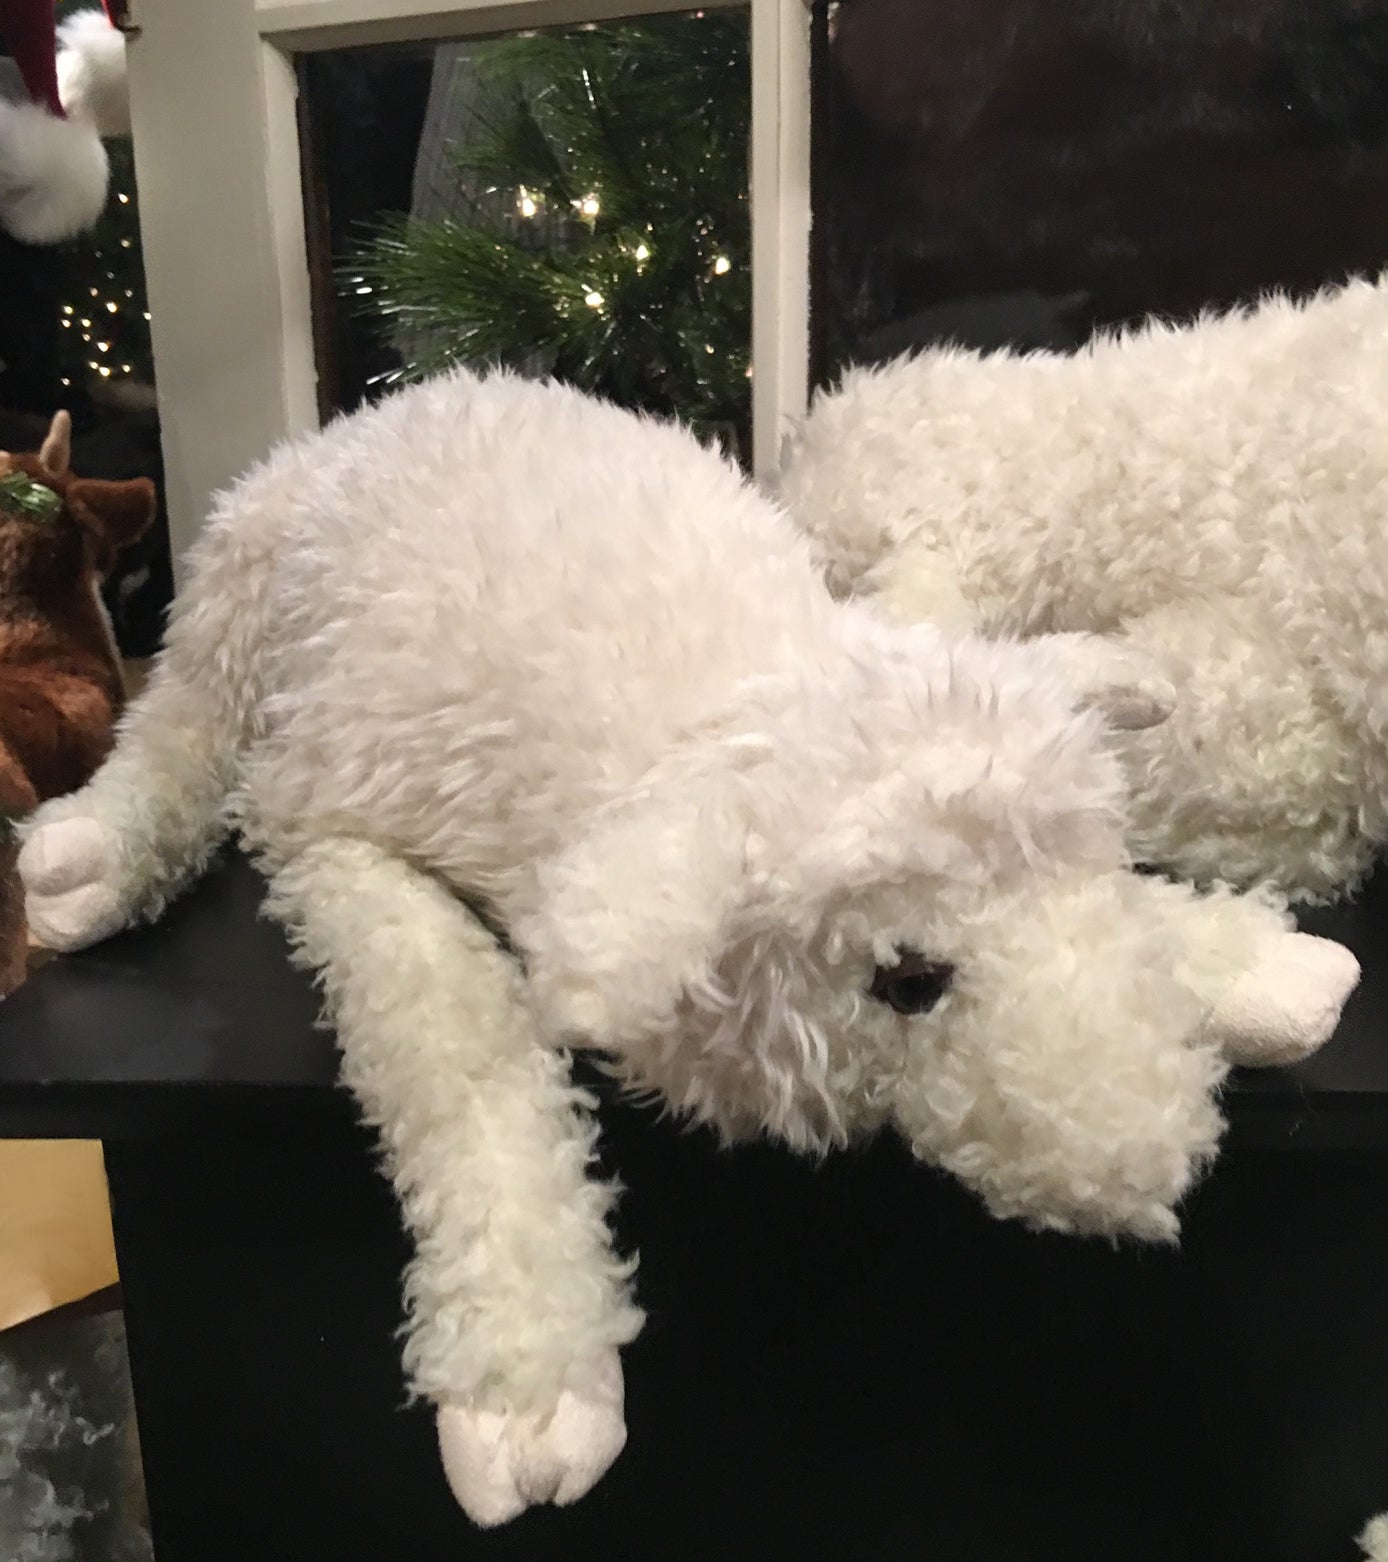 Plush Lamb Stuffed Animal - Life-like